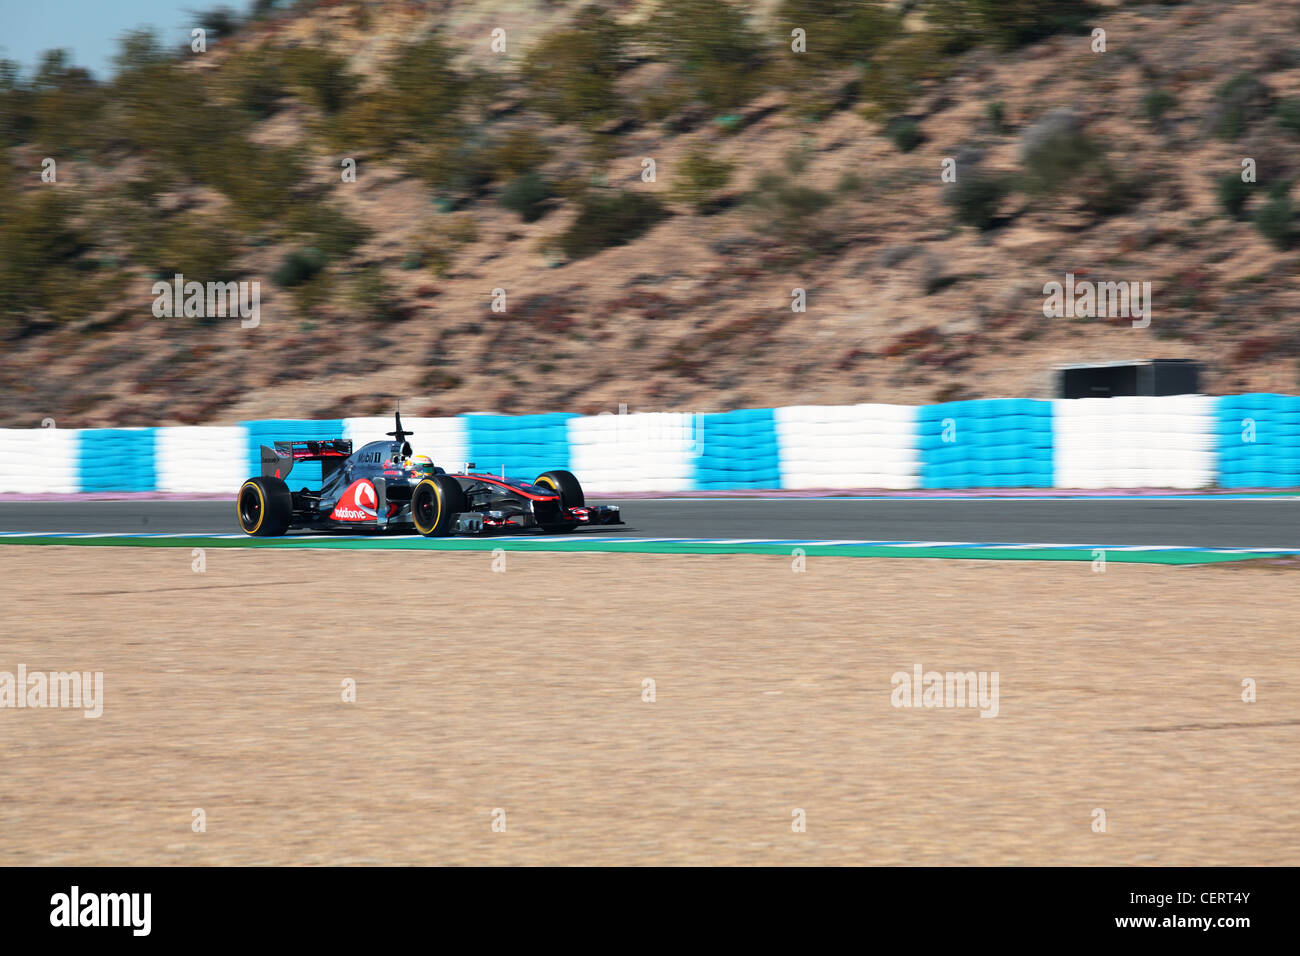 Lewis Hamilton driving McLaren Mercedes F1 race car during Formula One track testing at Jerez circuit Andalucia Spain Stock Photo